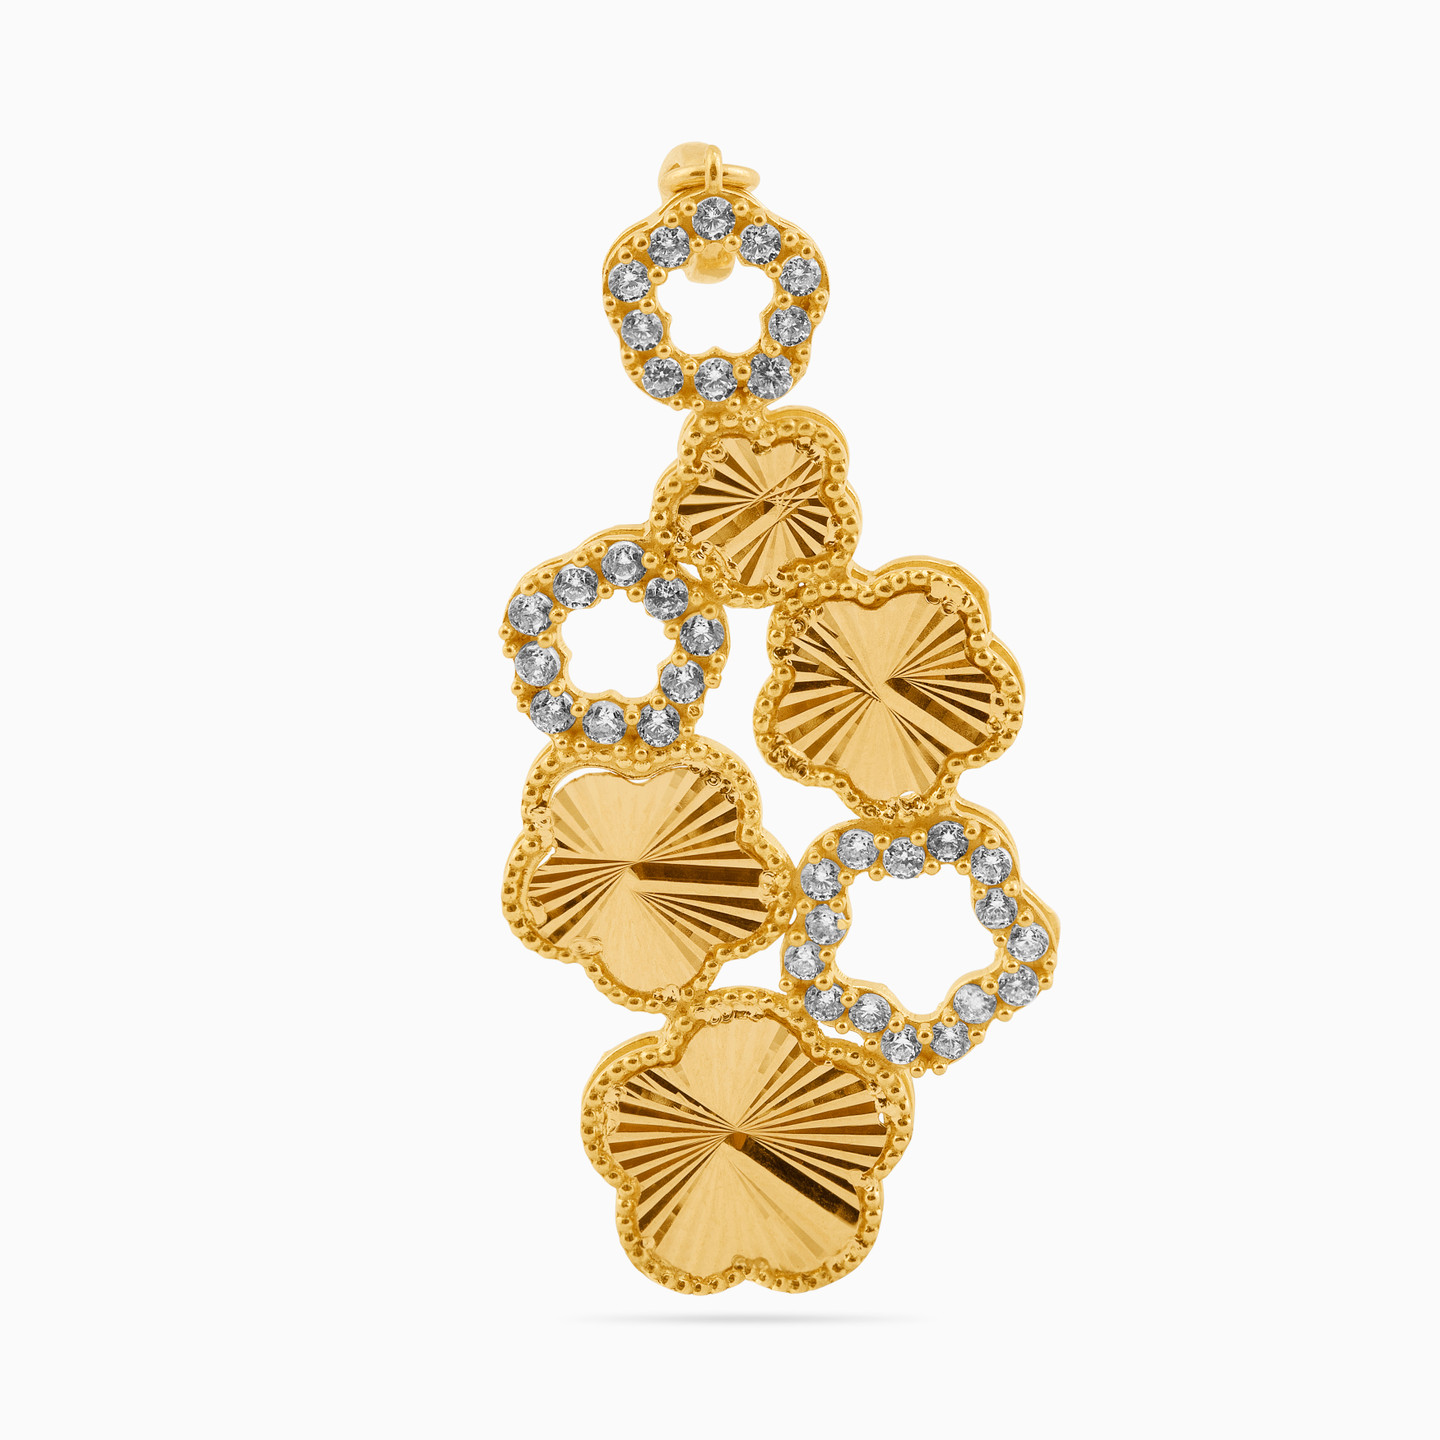 21K Gold Cubic Zirconia Half Jewelry Set - 3 Pieces - 2